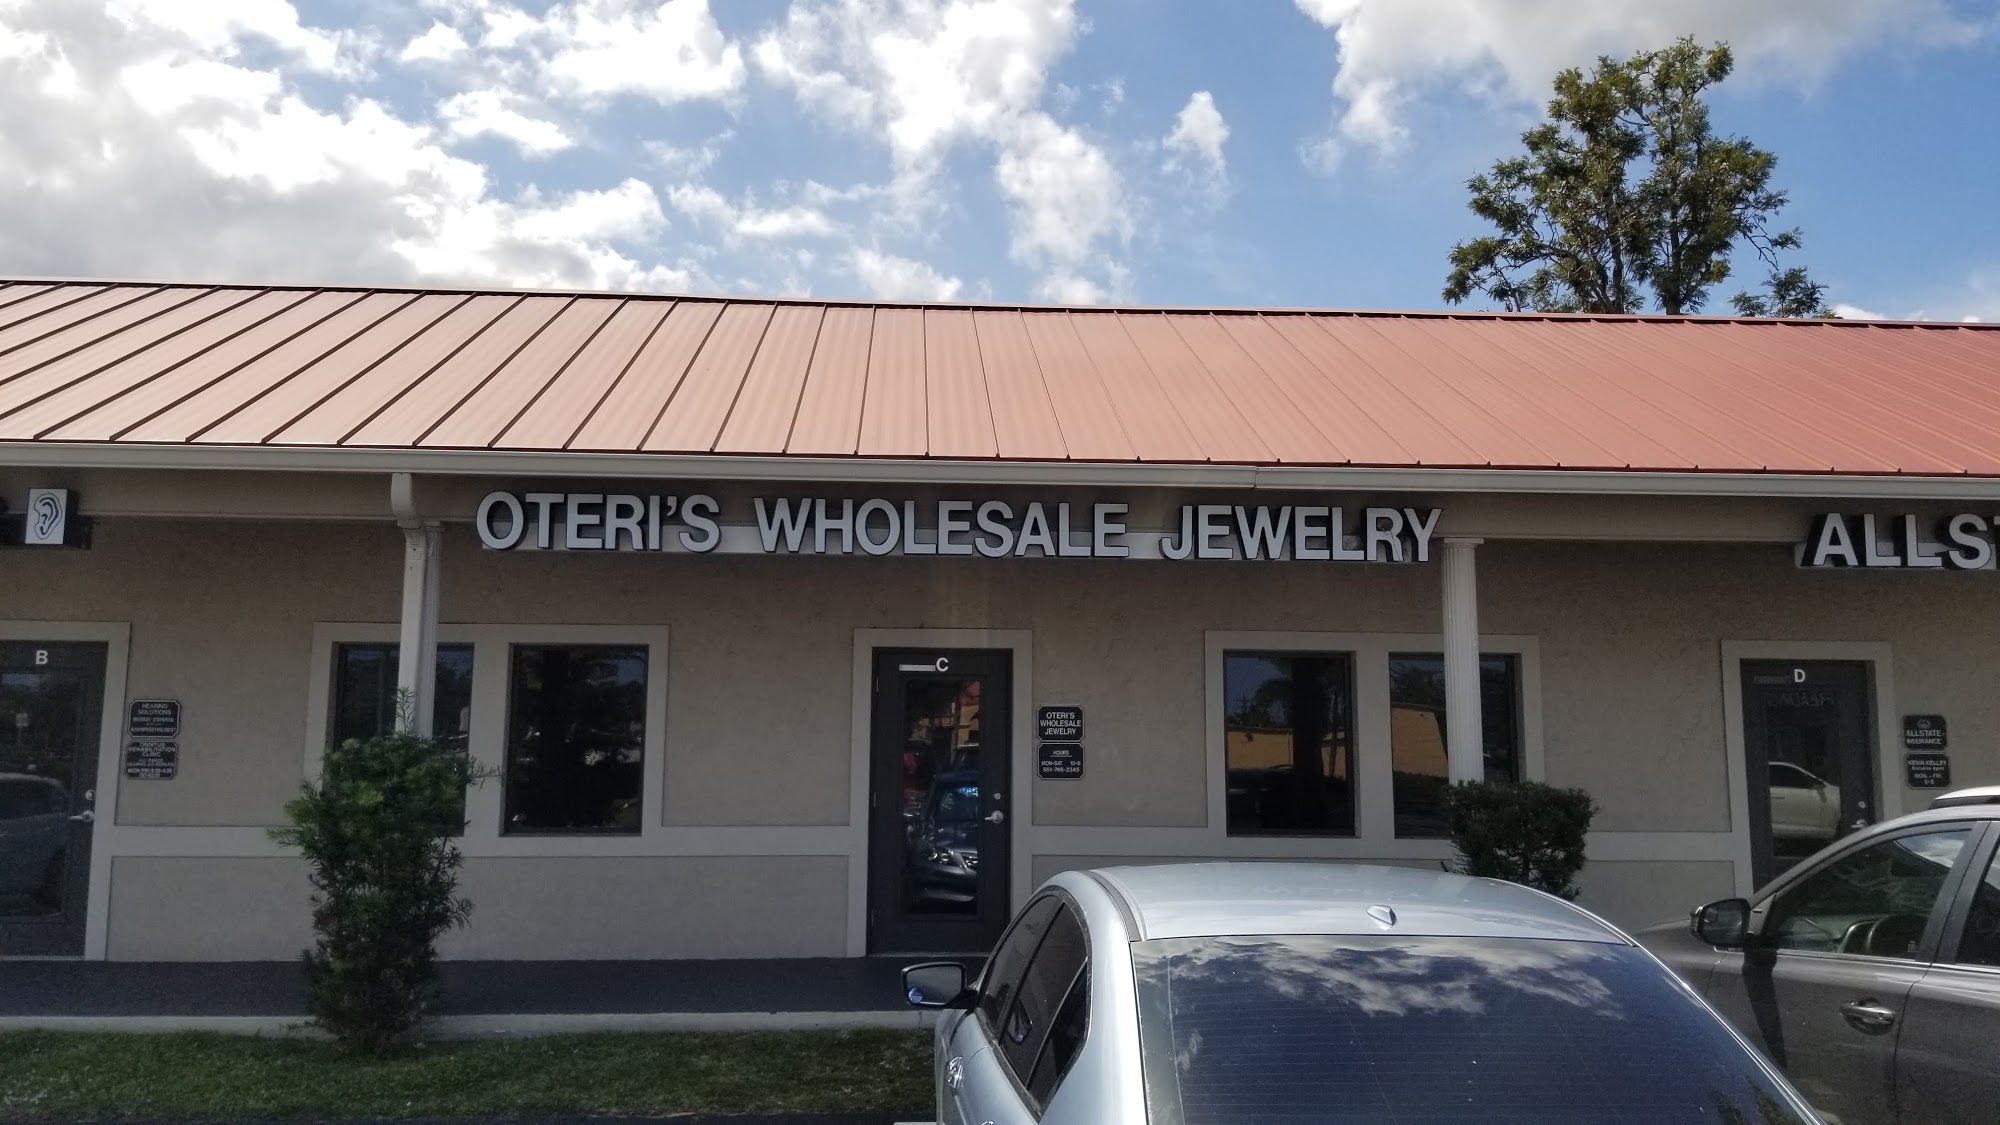 Oteri's Wholesale Jewelry